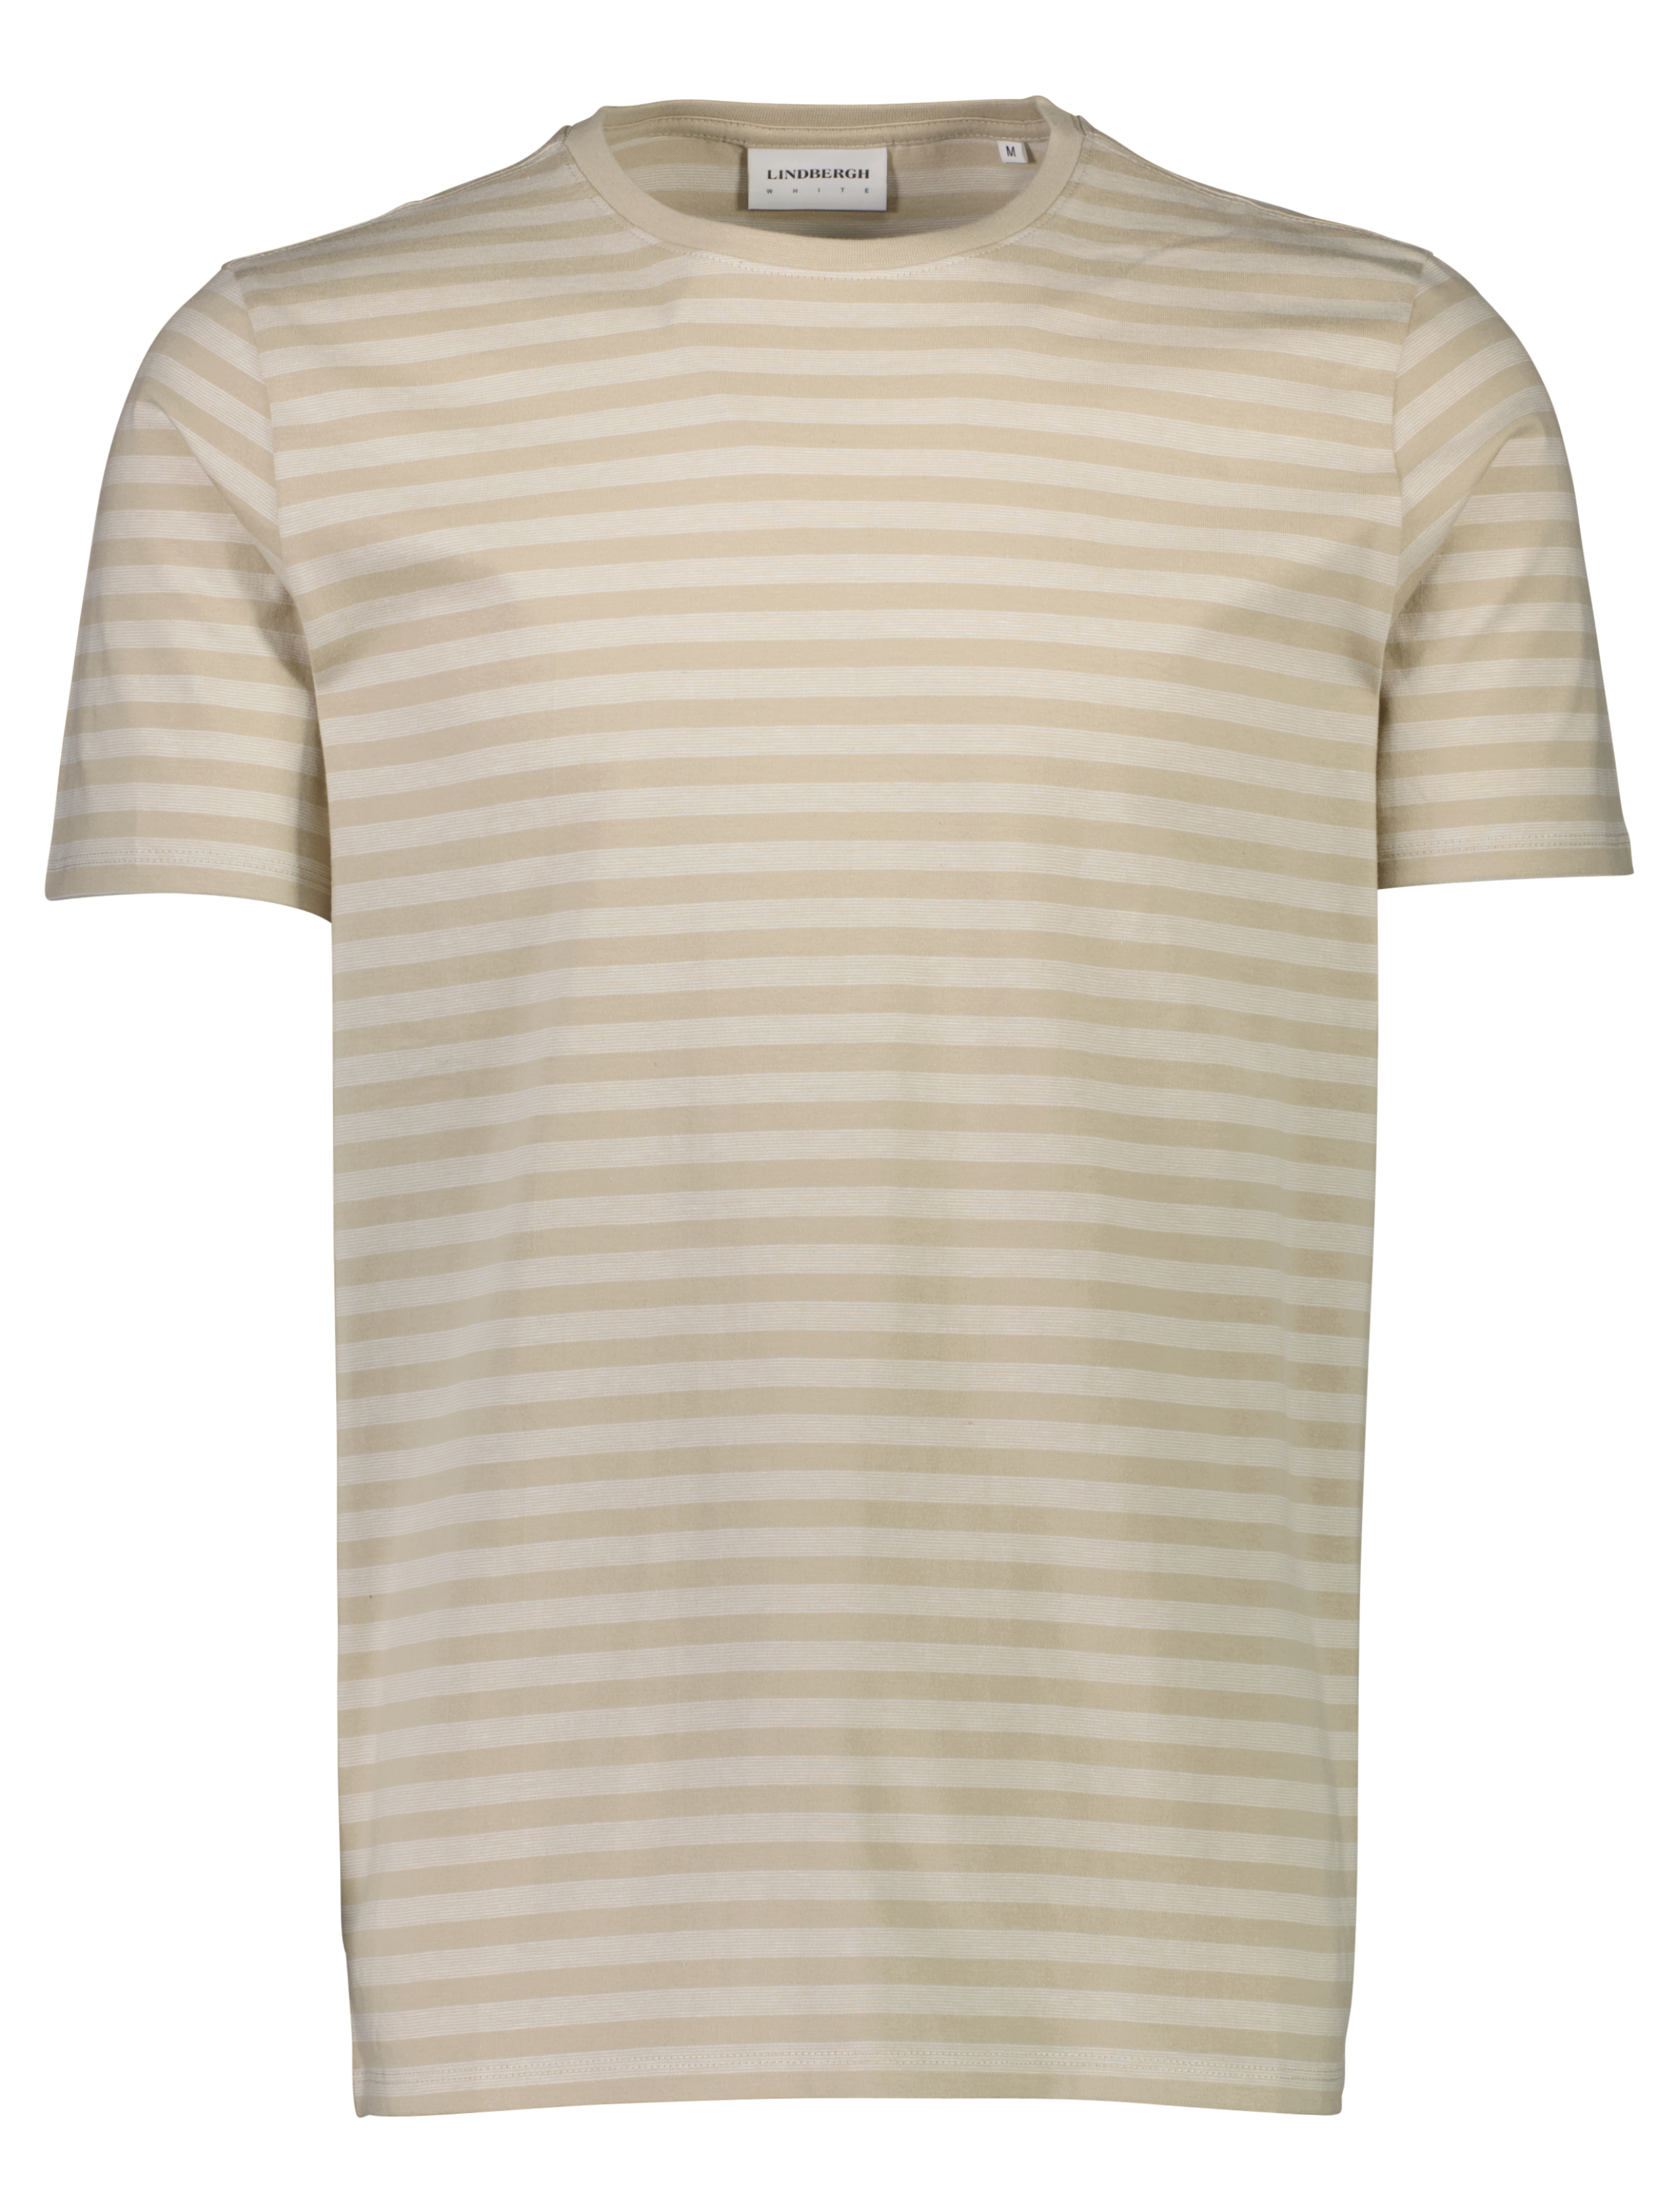 Lindbergh T-shirt sand / sand